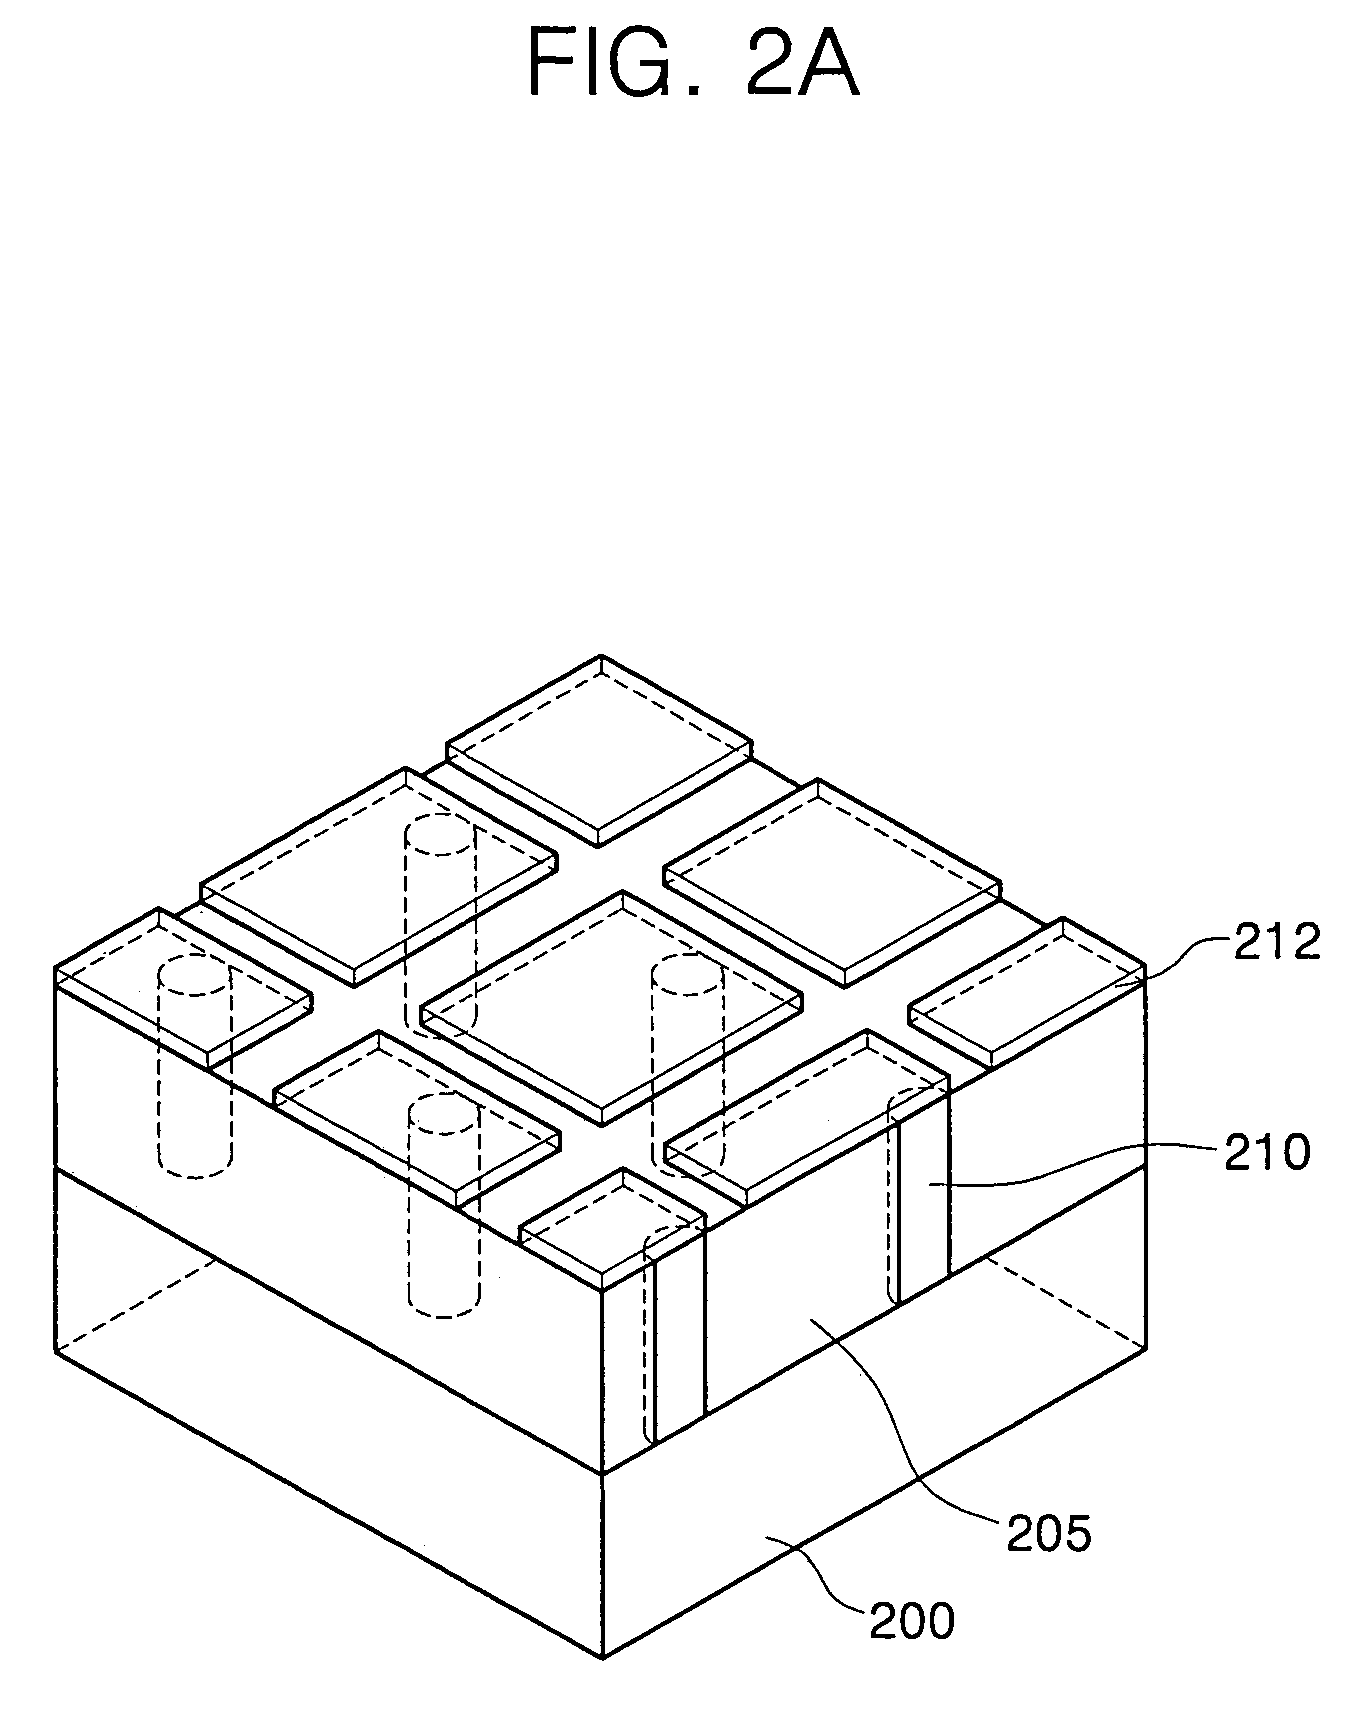 Semiconductor device having box-shaped cylindrical storage nodes and fabrication method thereof